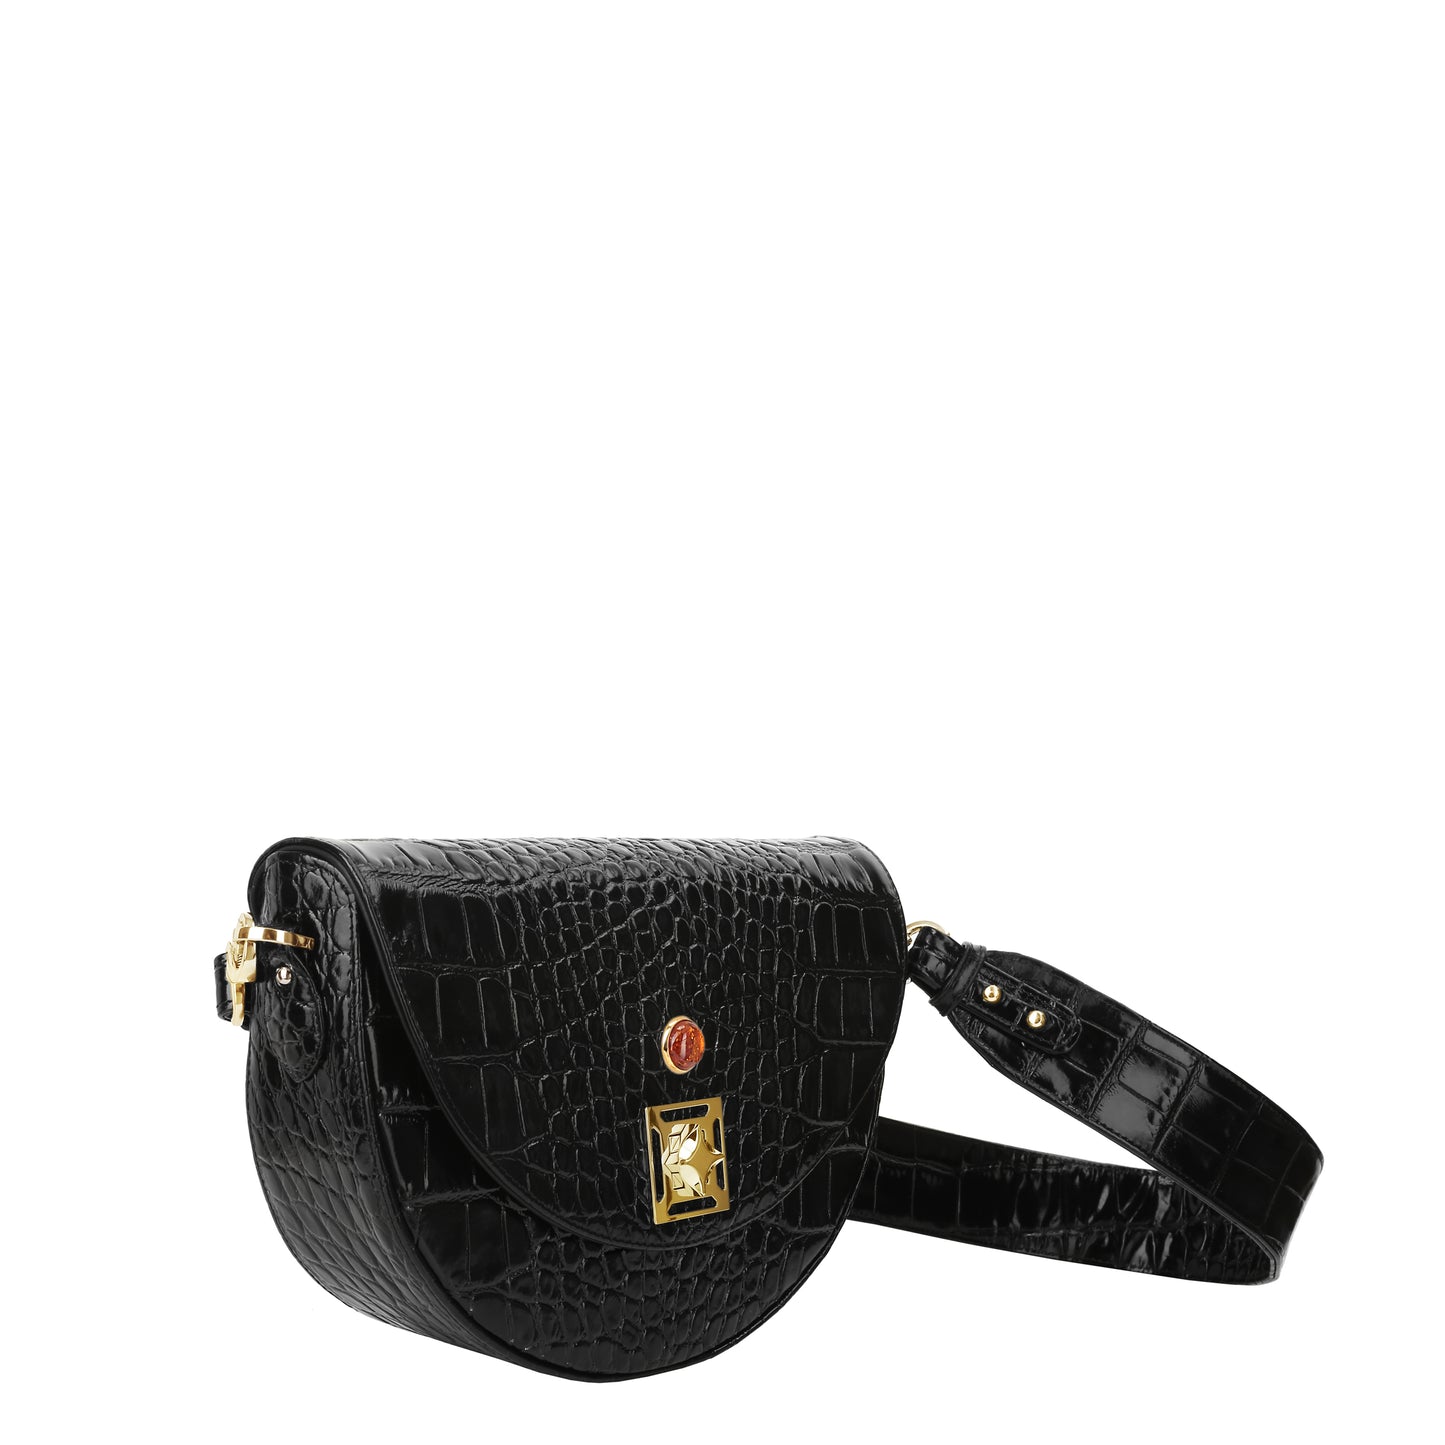 AMBER croco black women's leather handbag